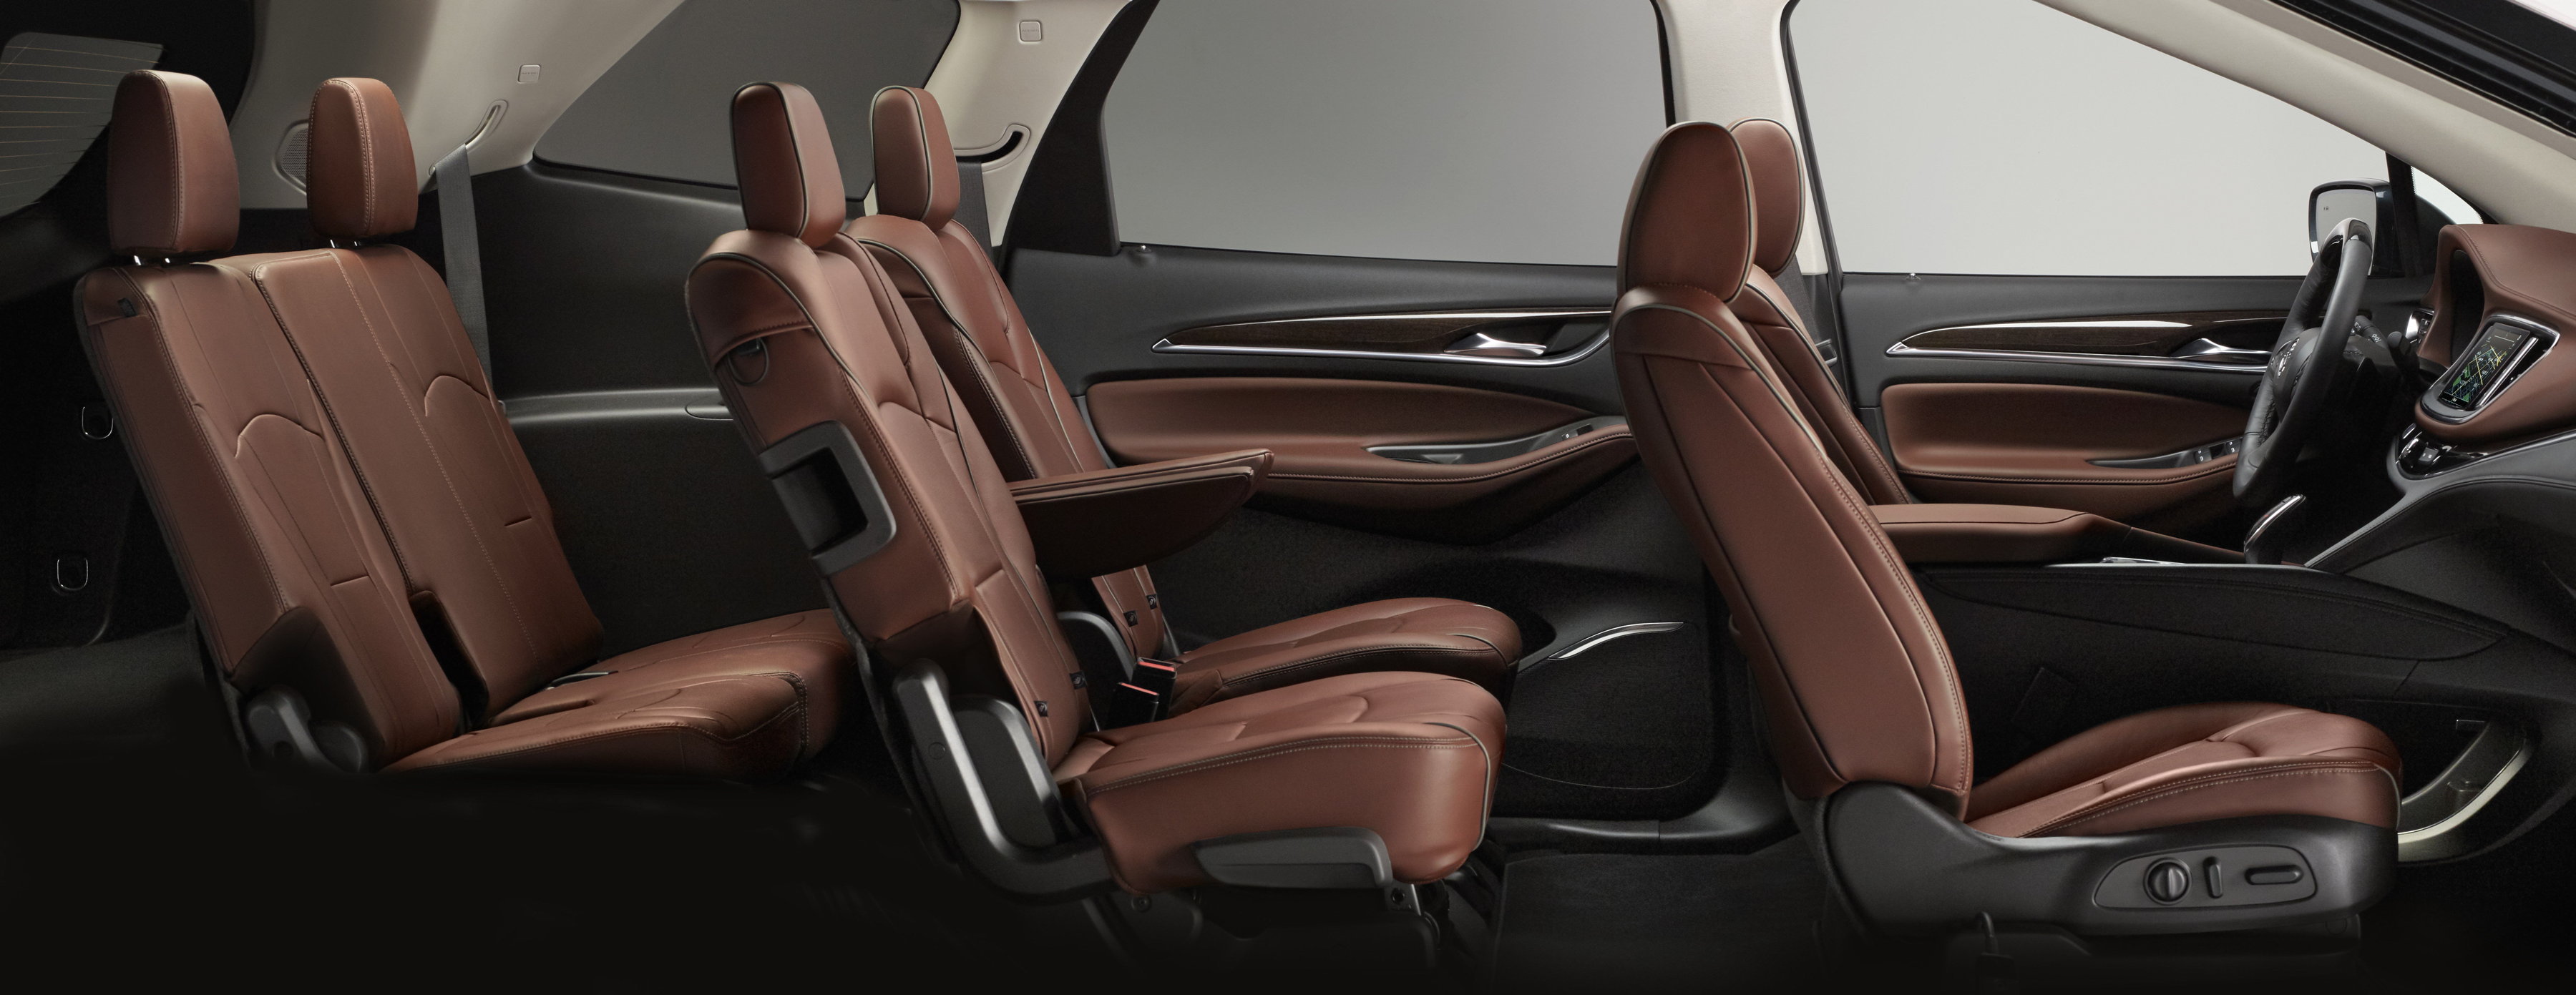 2018 Buick Enclave Avenir Interior 004 - side profile cutaway - all three rows